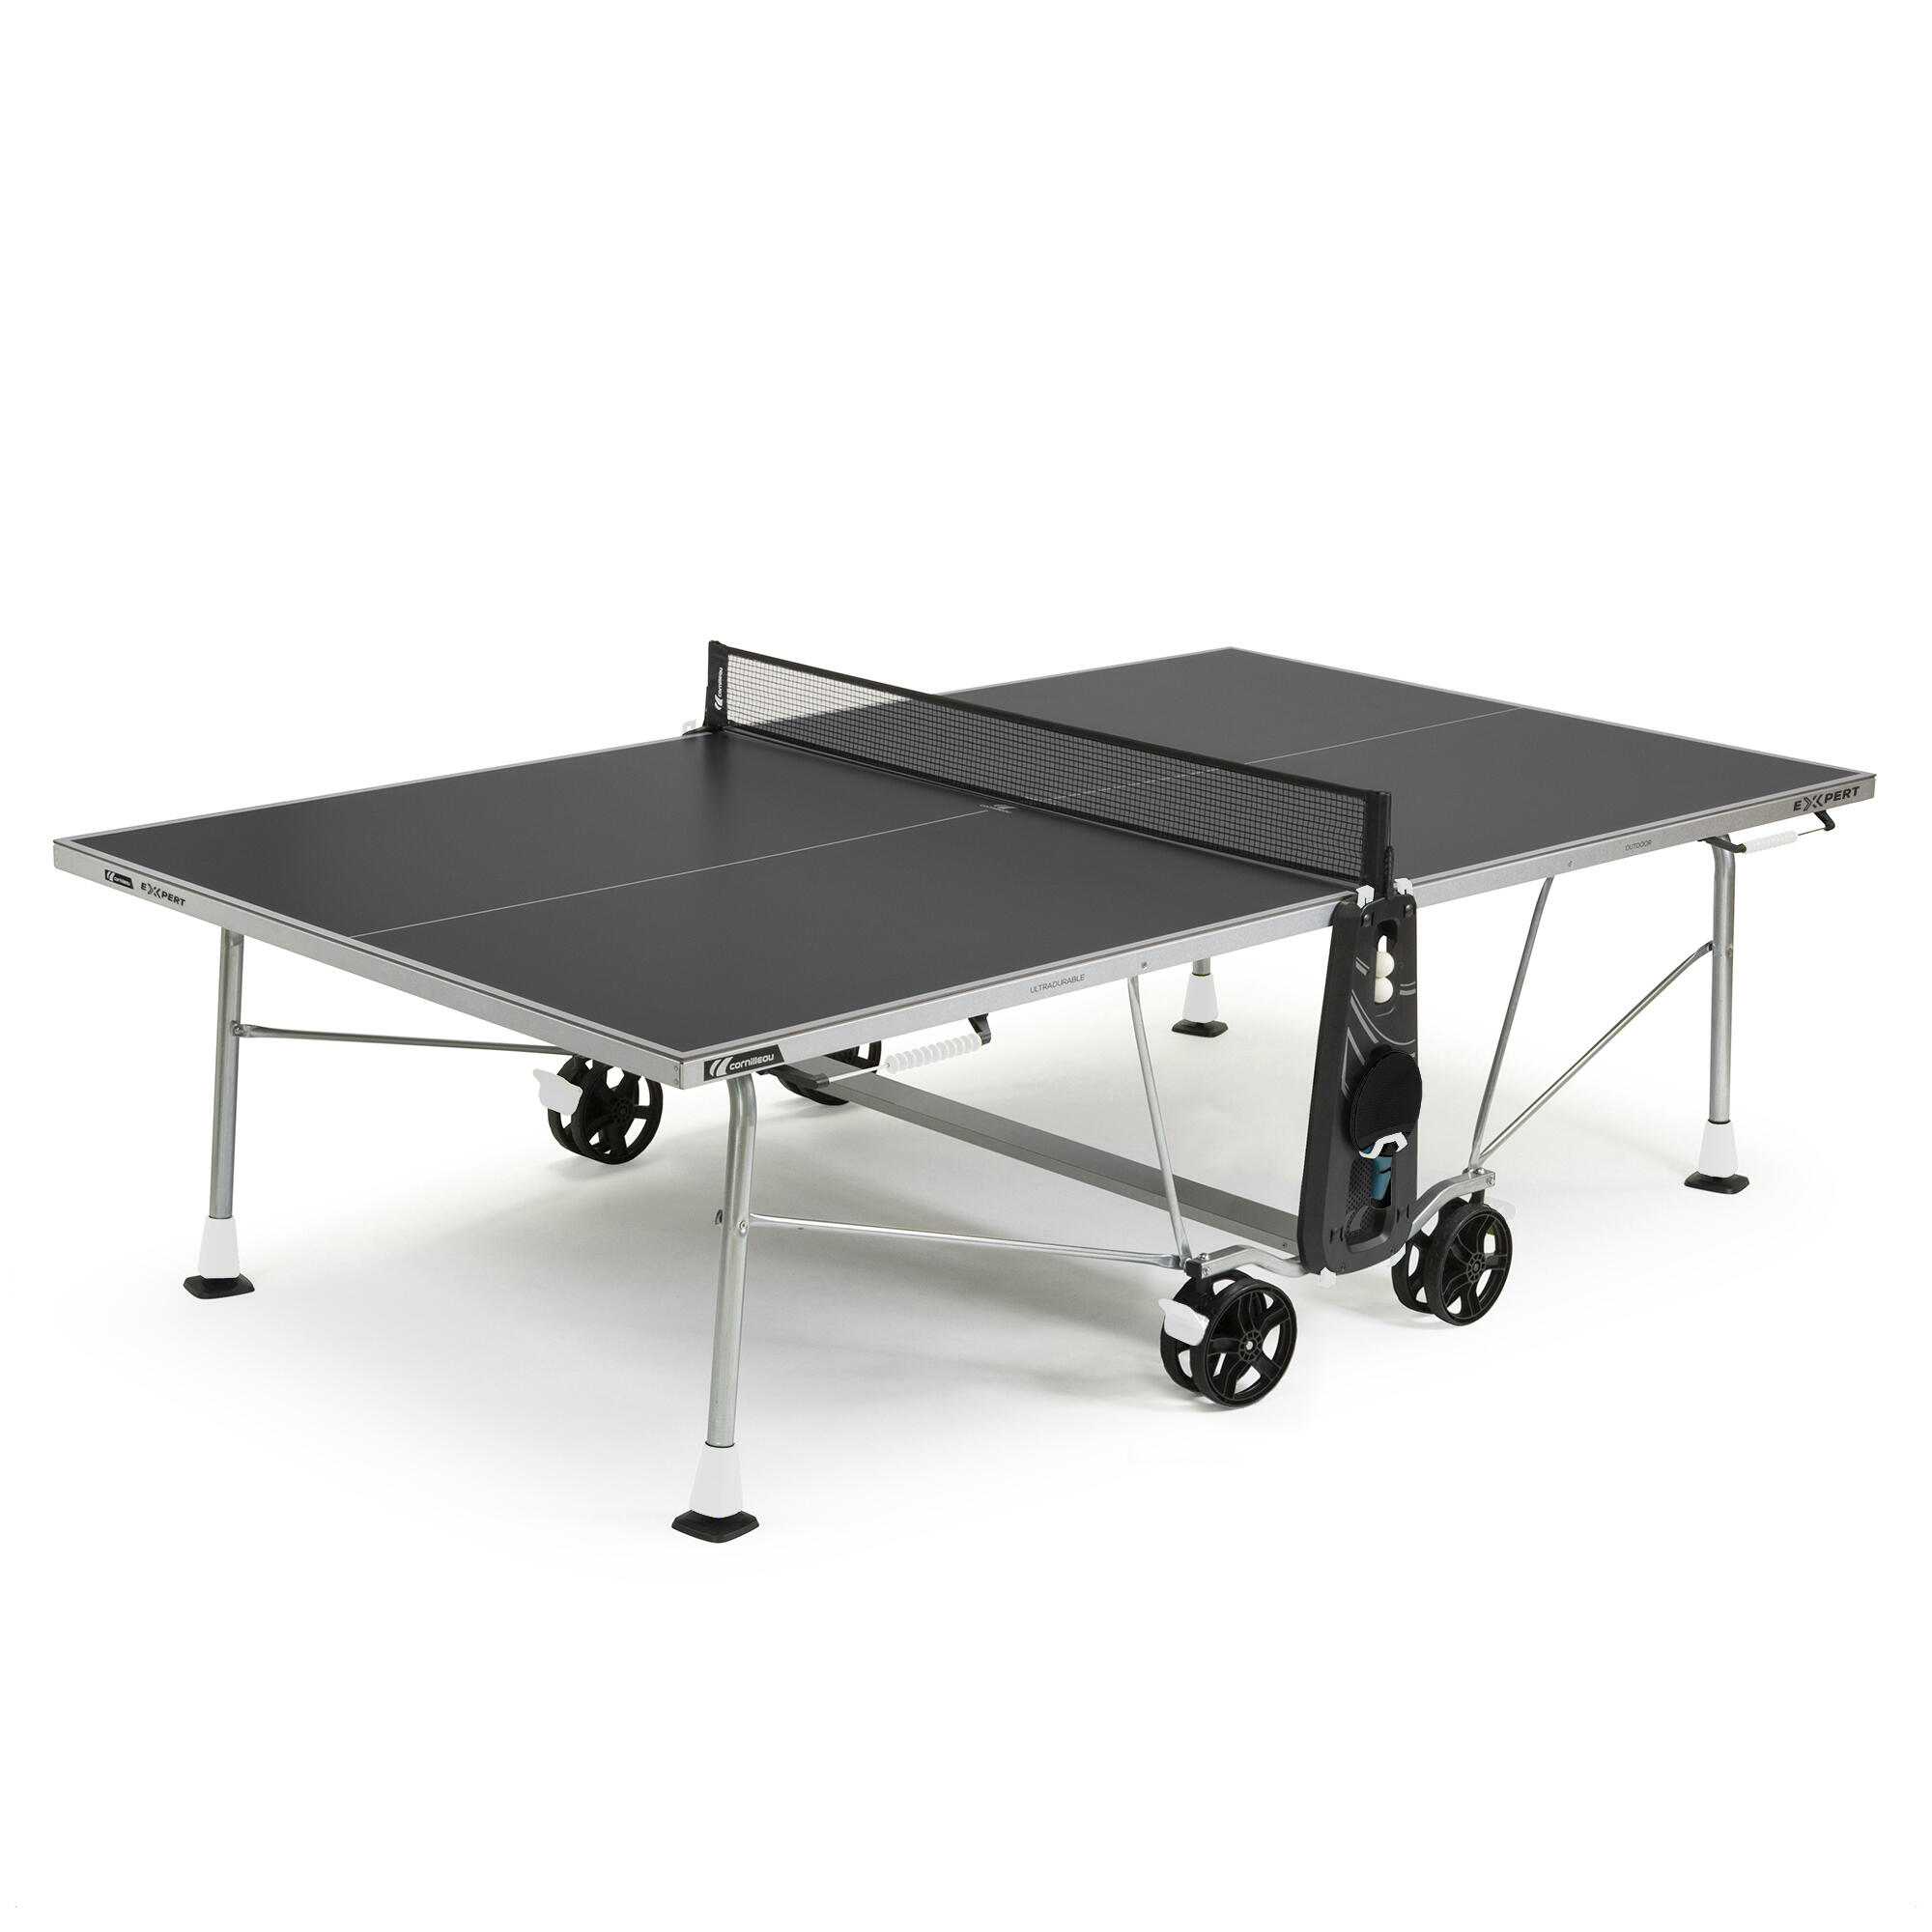 CORNILLEAU Recreational Table Tennis Table Advanced Outdoor - Grey